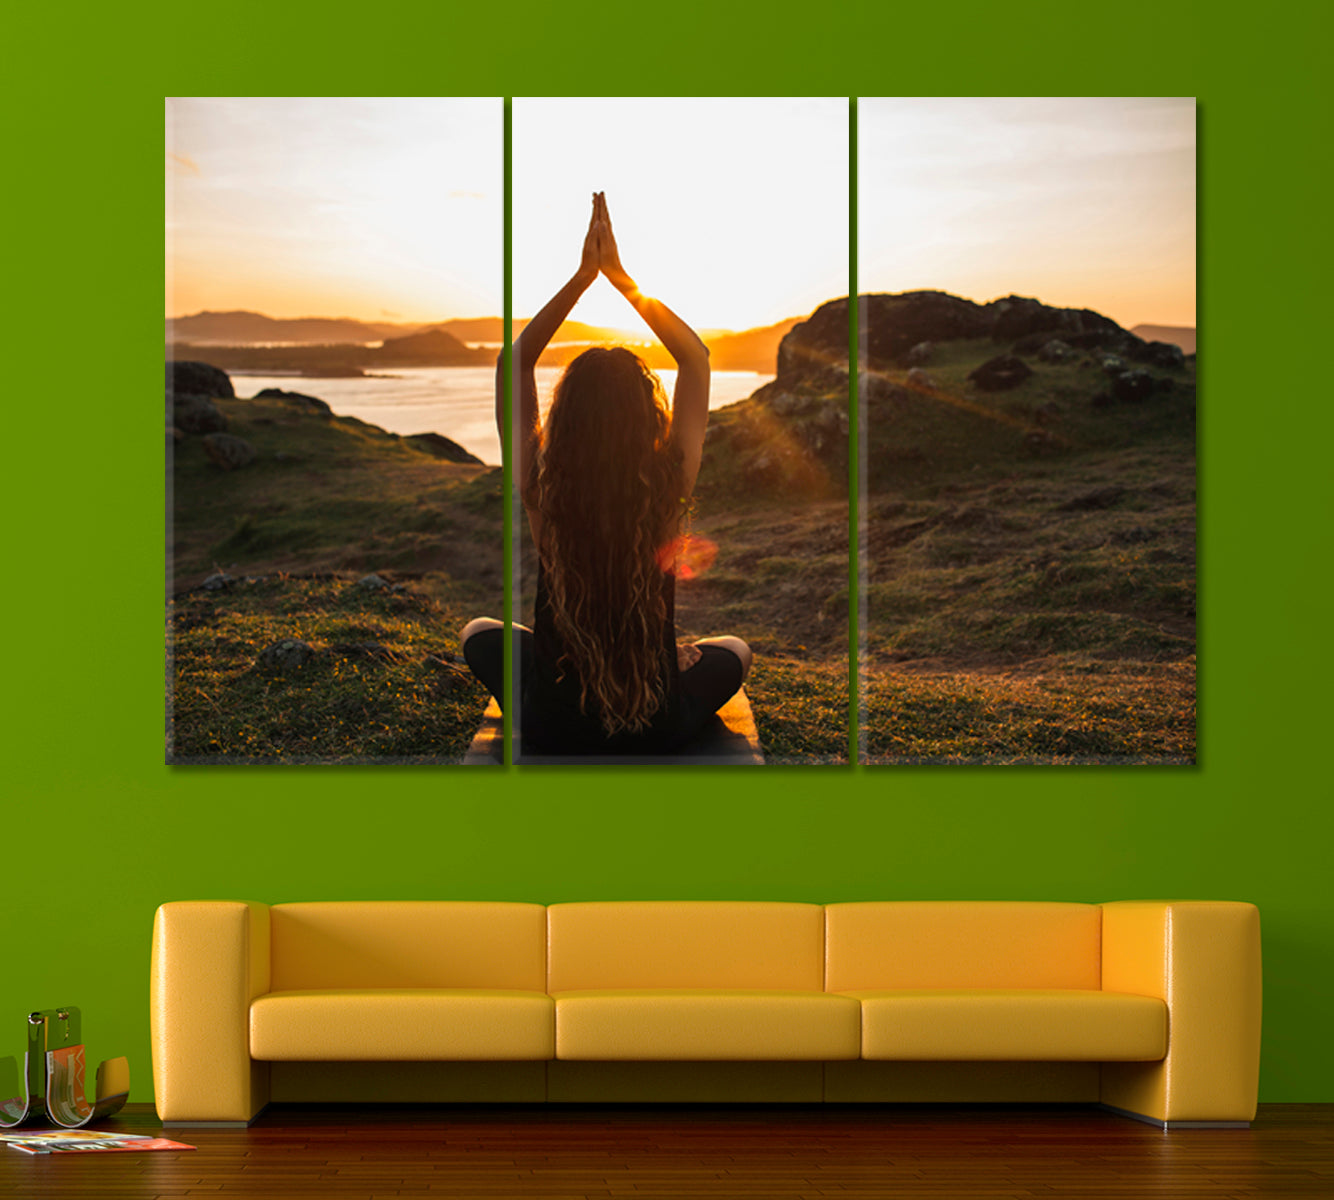 Spiritual Harmony Introspection Well-being Concept Canvas Print Landscape Yoga Spa, Zen Wall Canvas Art Artesty 3 panels 36" x 24" 